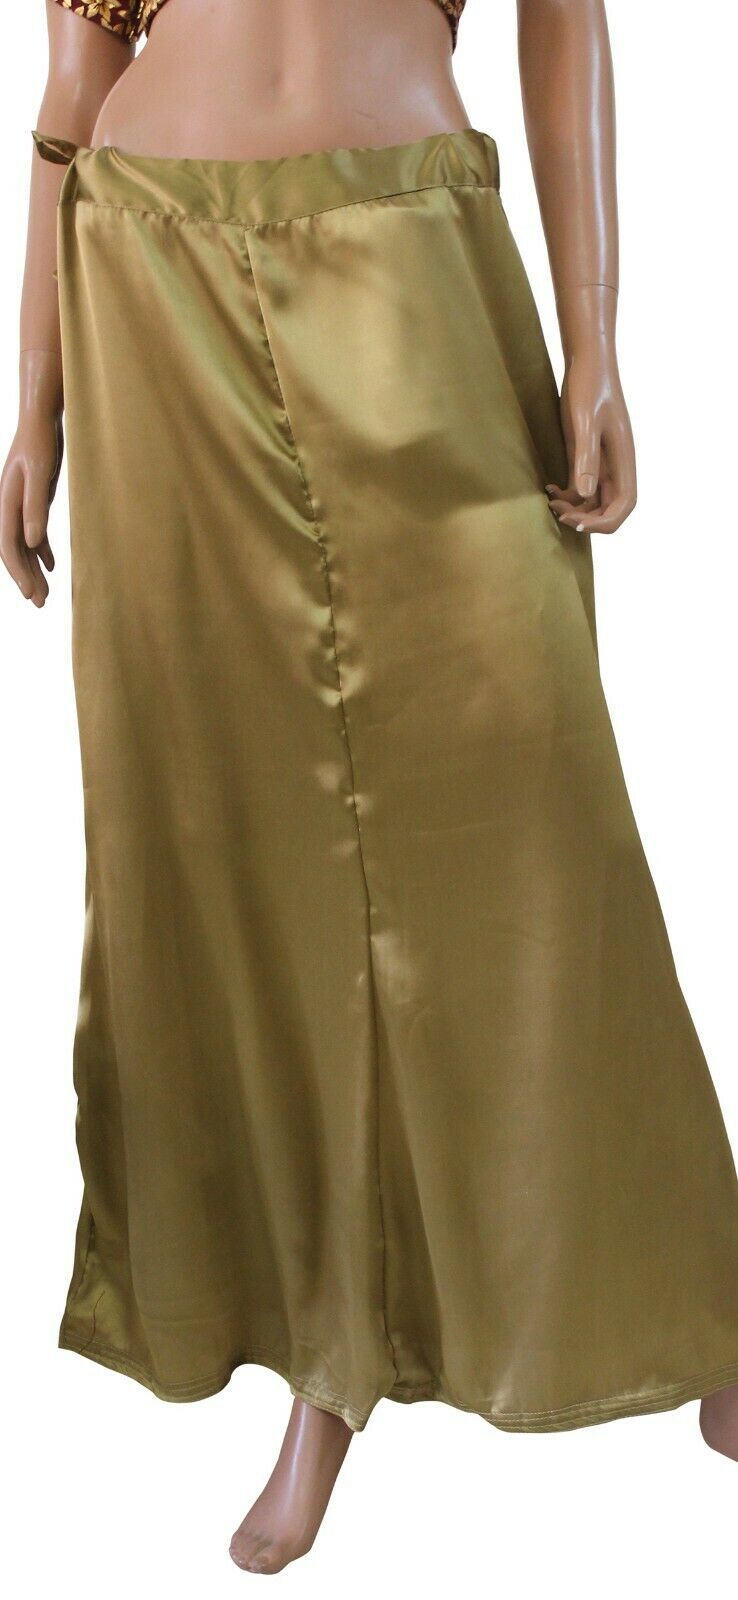 Dark Gold  Satin Indian saree Sari Petticoat Underskirt belly dancing New  slip